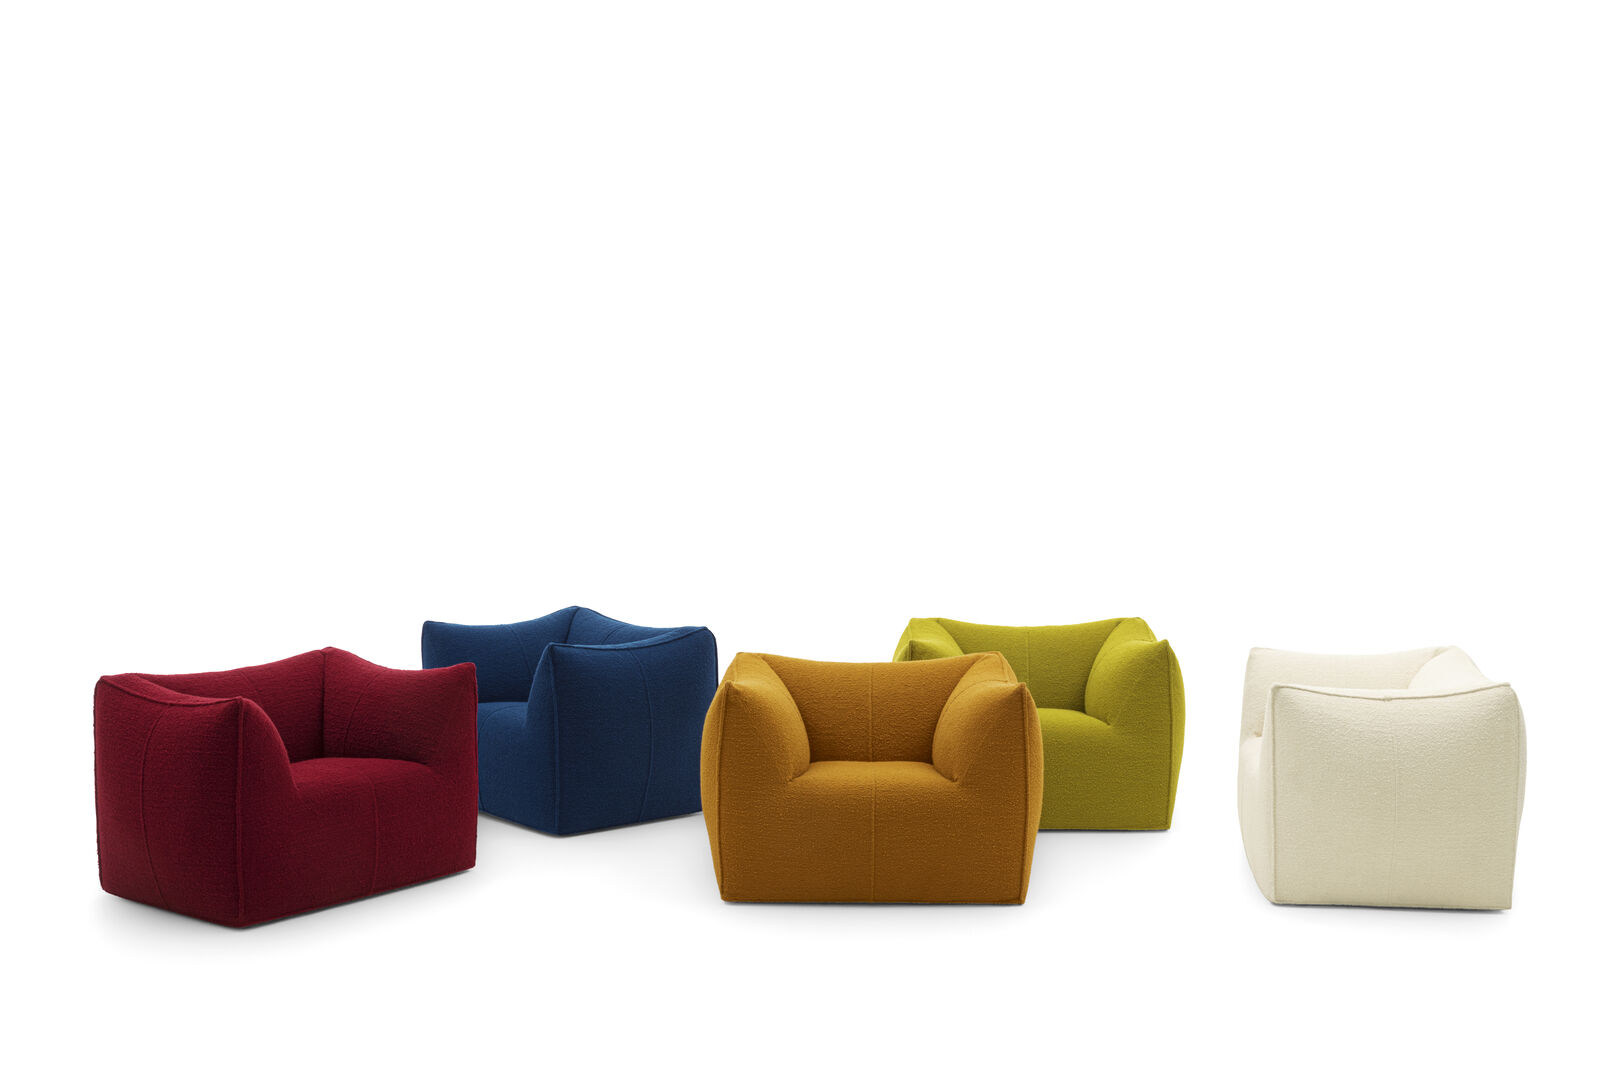  The Bambola armchair design by Mario Bellini